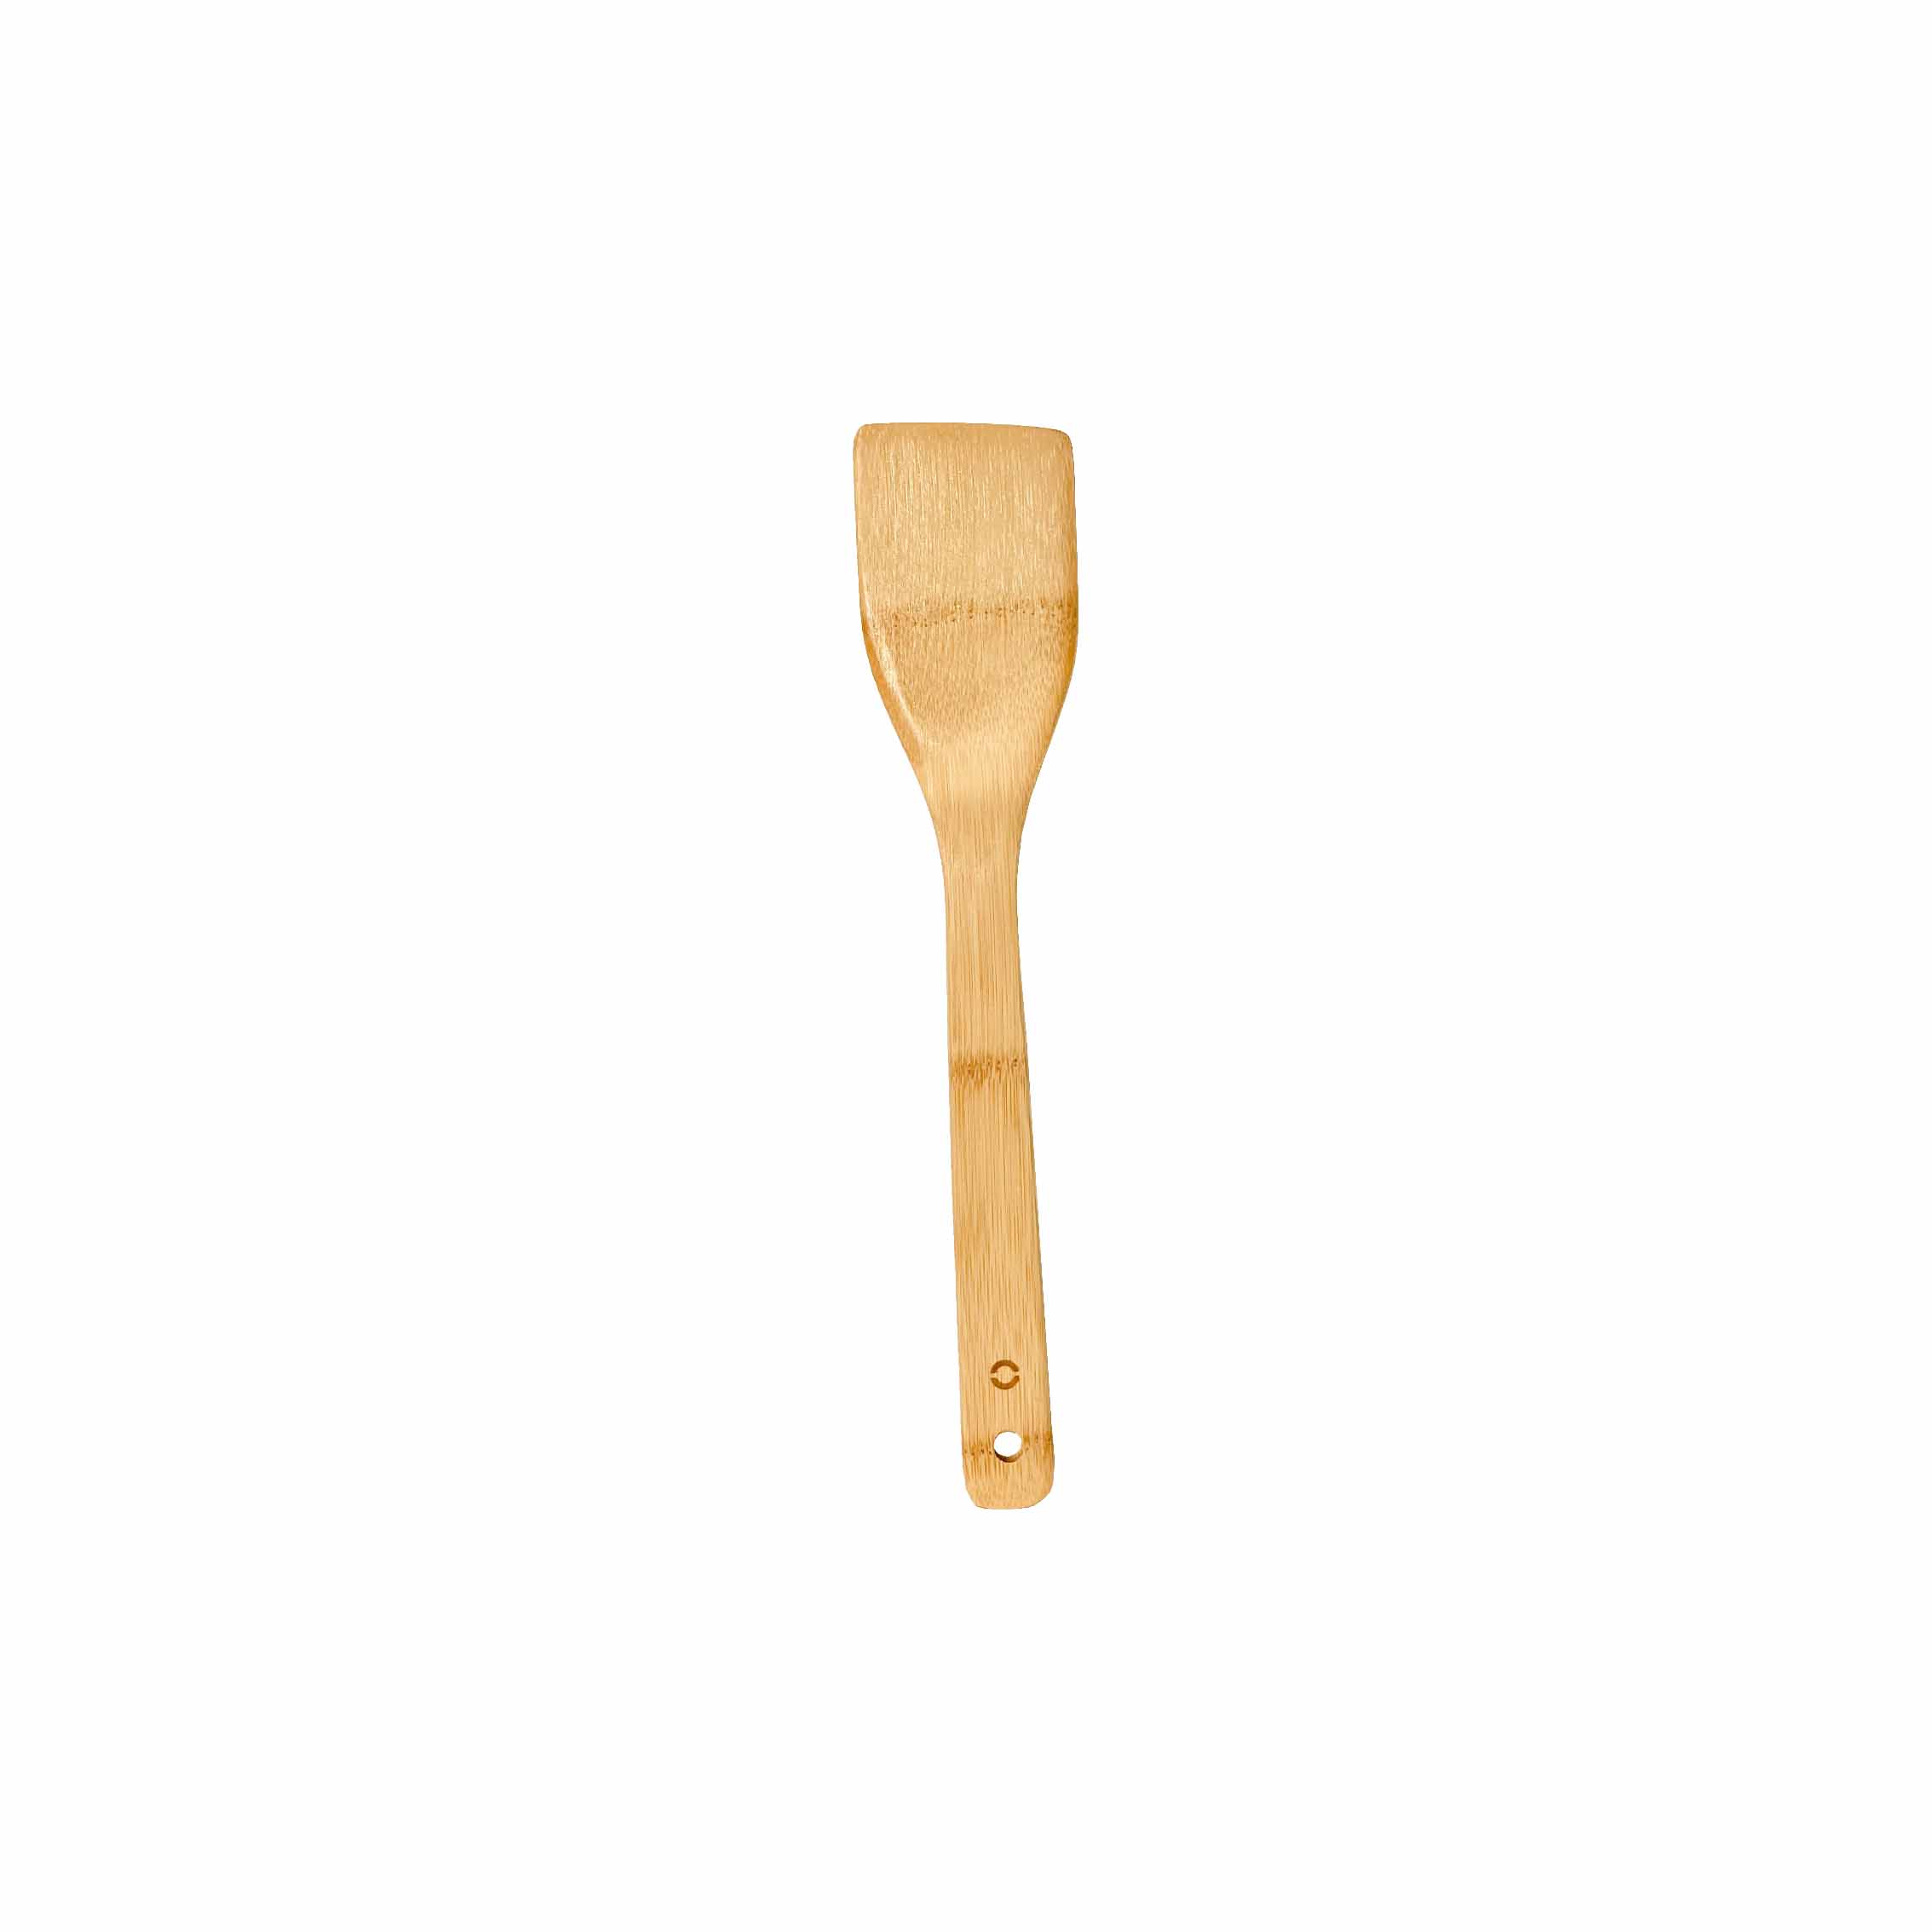 https://kuokokitchen.com/wp-content/uploads/kitchen-utensils-spatula-bamboo-utensilio-cocina-espatula-madera-bambu-sostenible-cocina-saludable-sin-toxicos-healthy-kitchen-sustainable-free-of-toxics-1.jpg